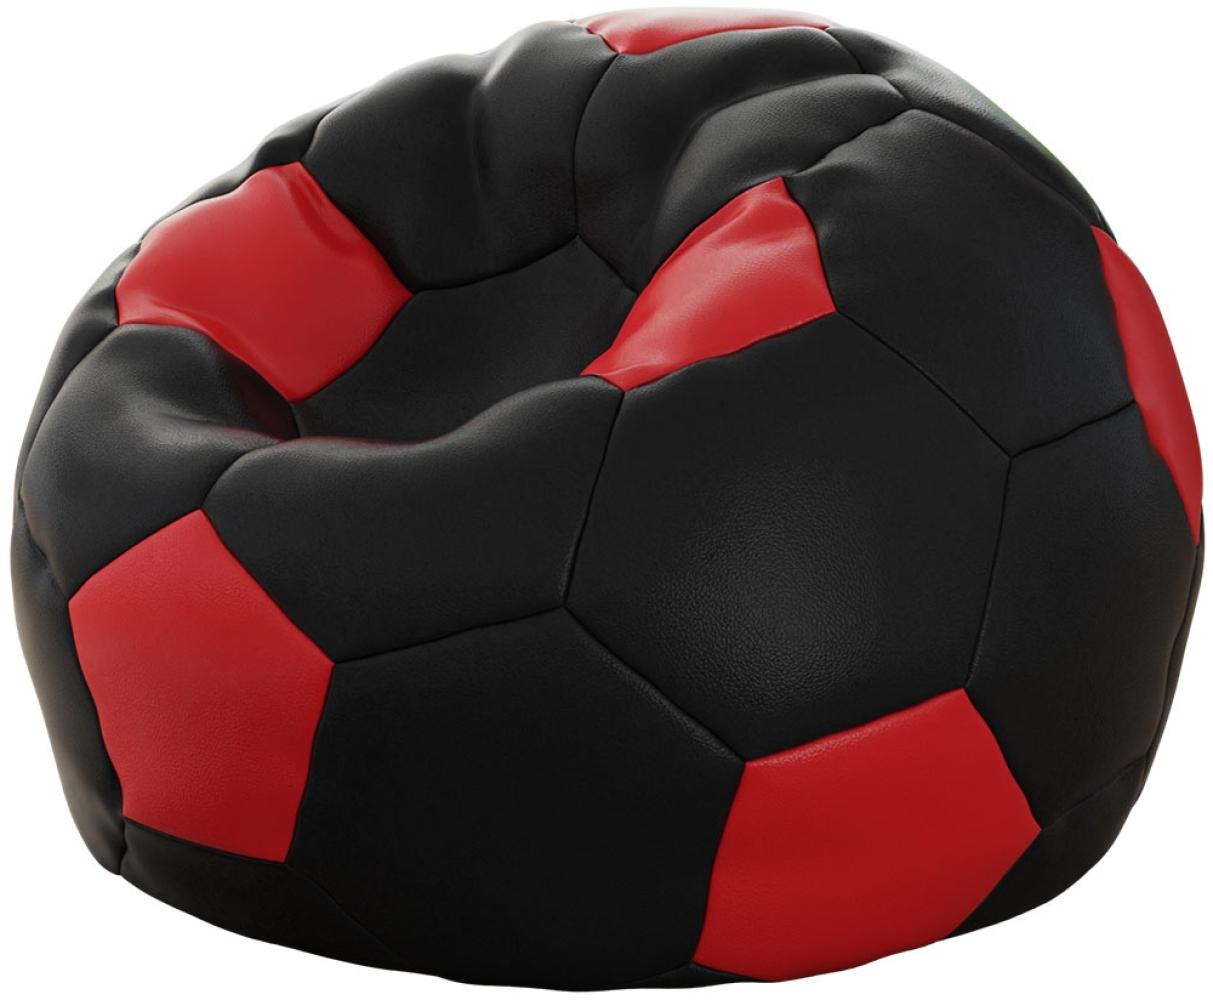 Sitzsack "Fußball" Akimbo 500L, schwarz/rot Bild 1